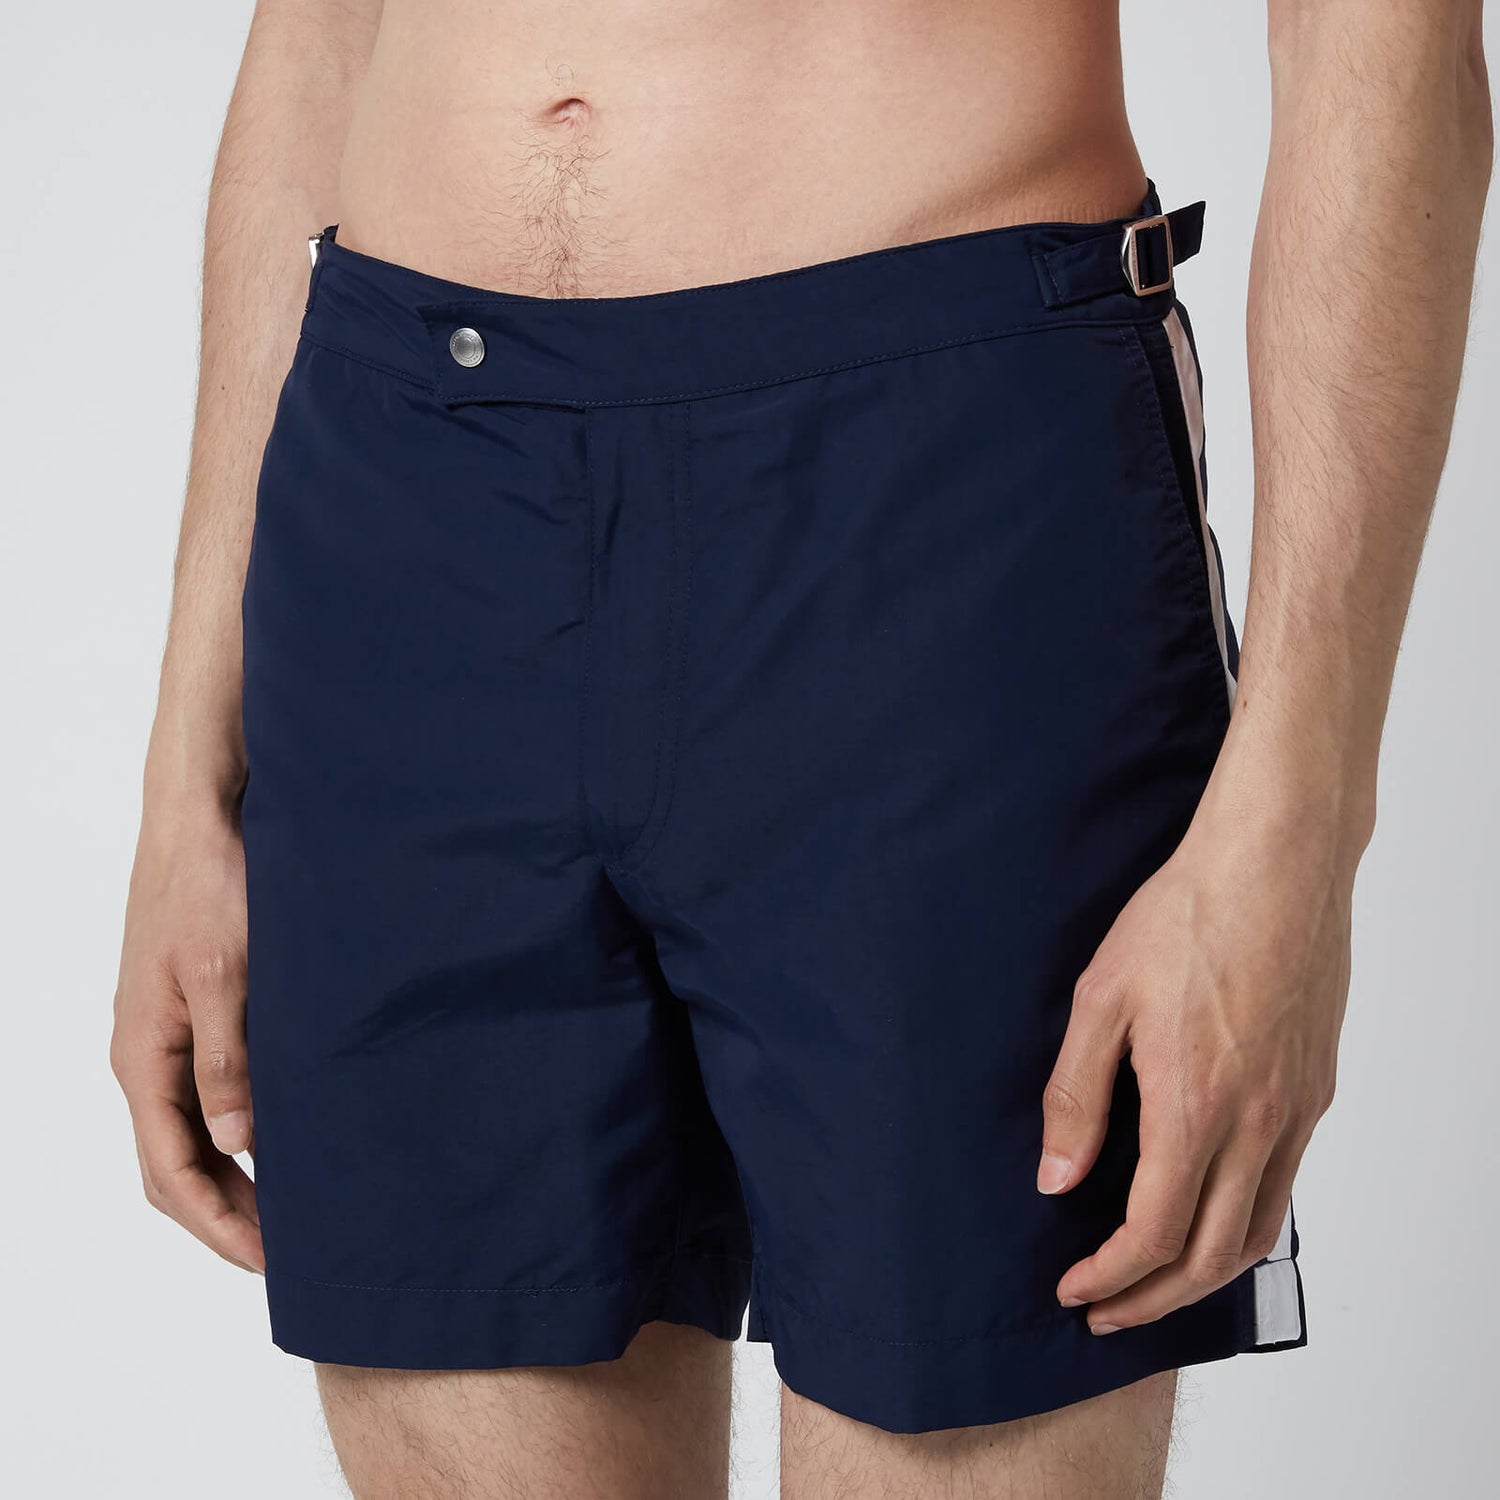 Polo Ralph Lauren Men's Monaco Swim Shorts - Newport Navy/White